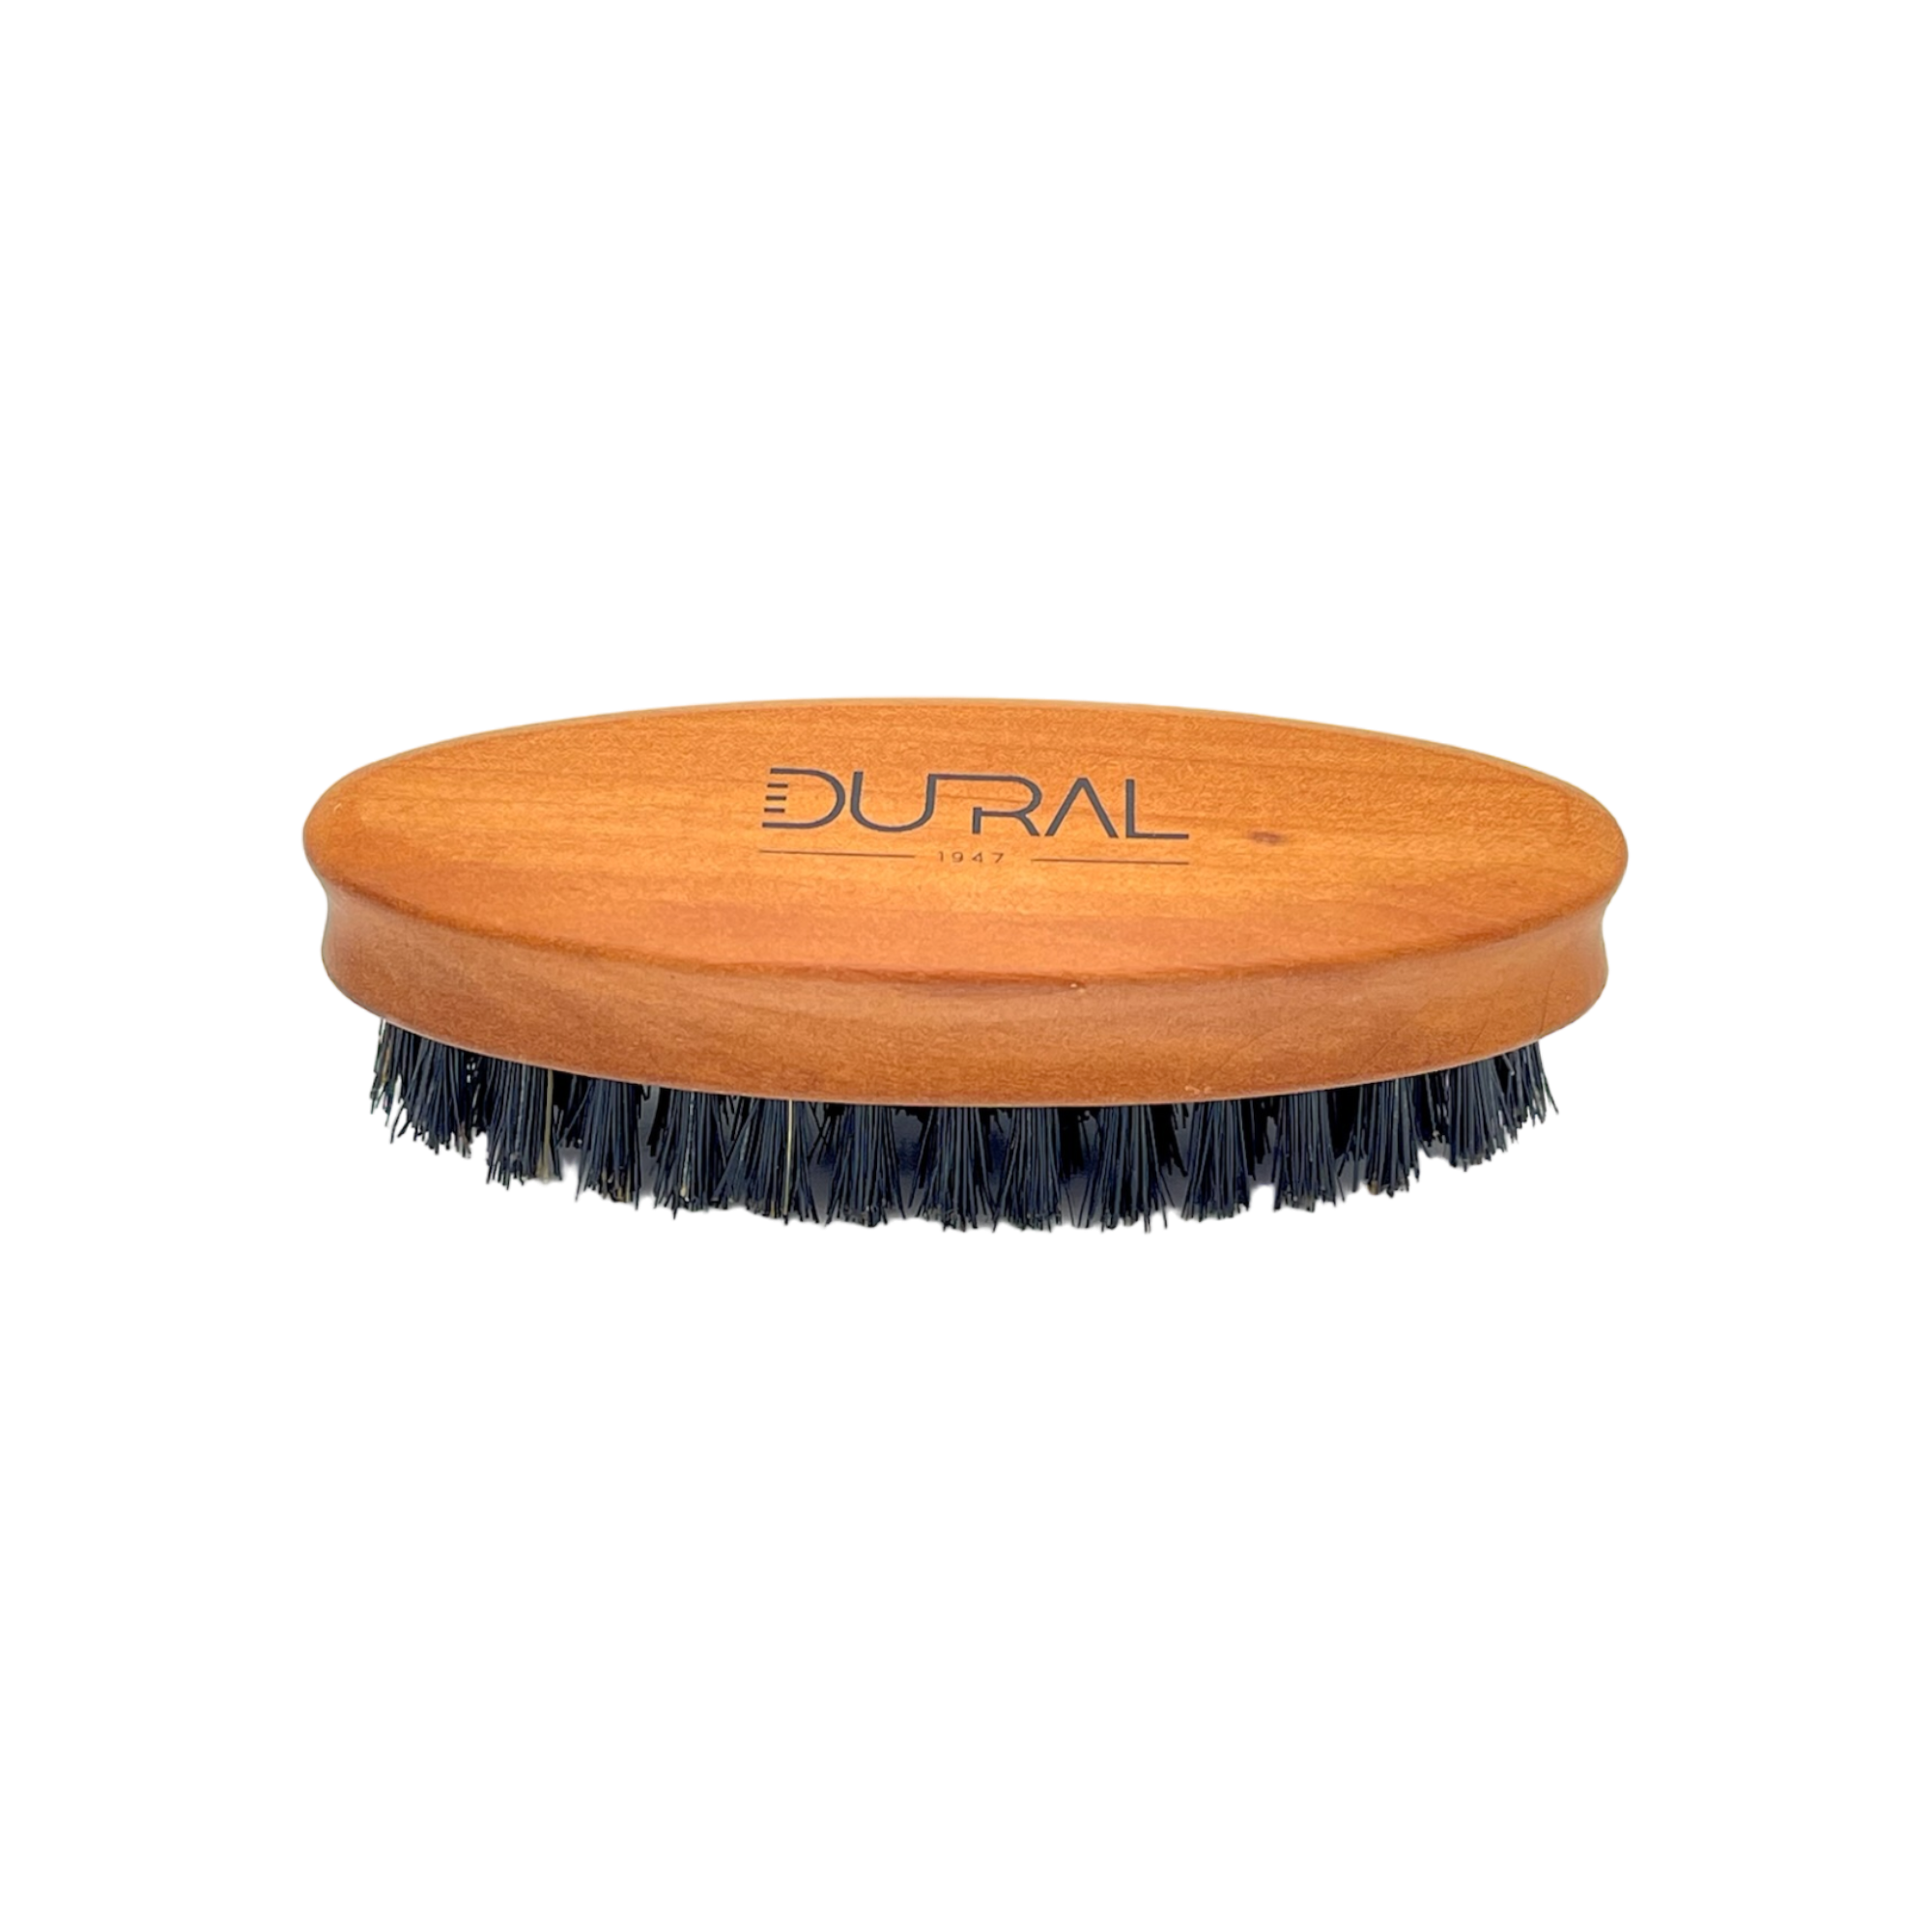 Dural Pear wood beard brush with soft natural bristles